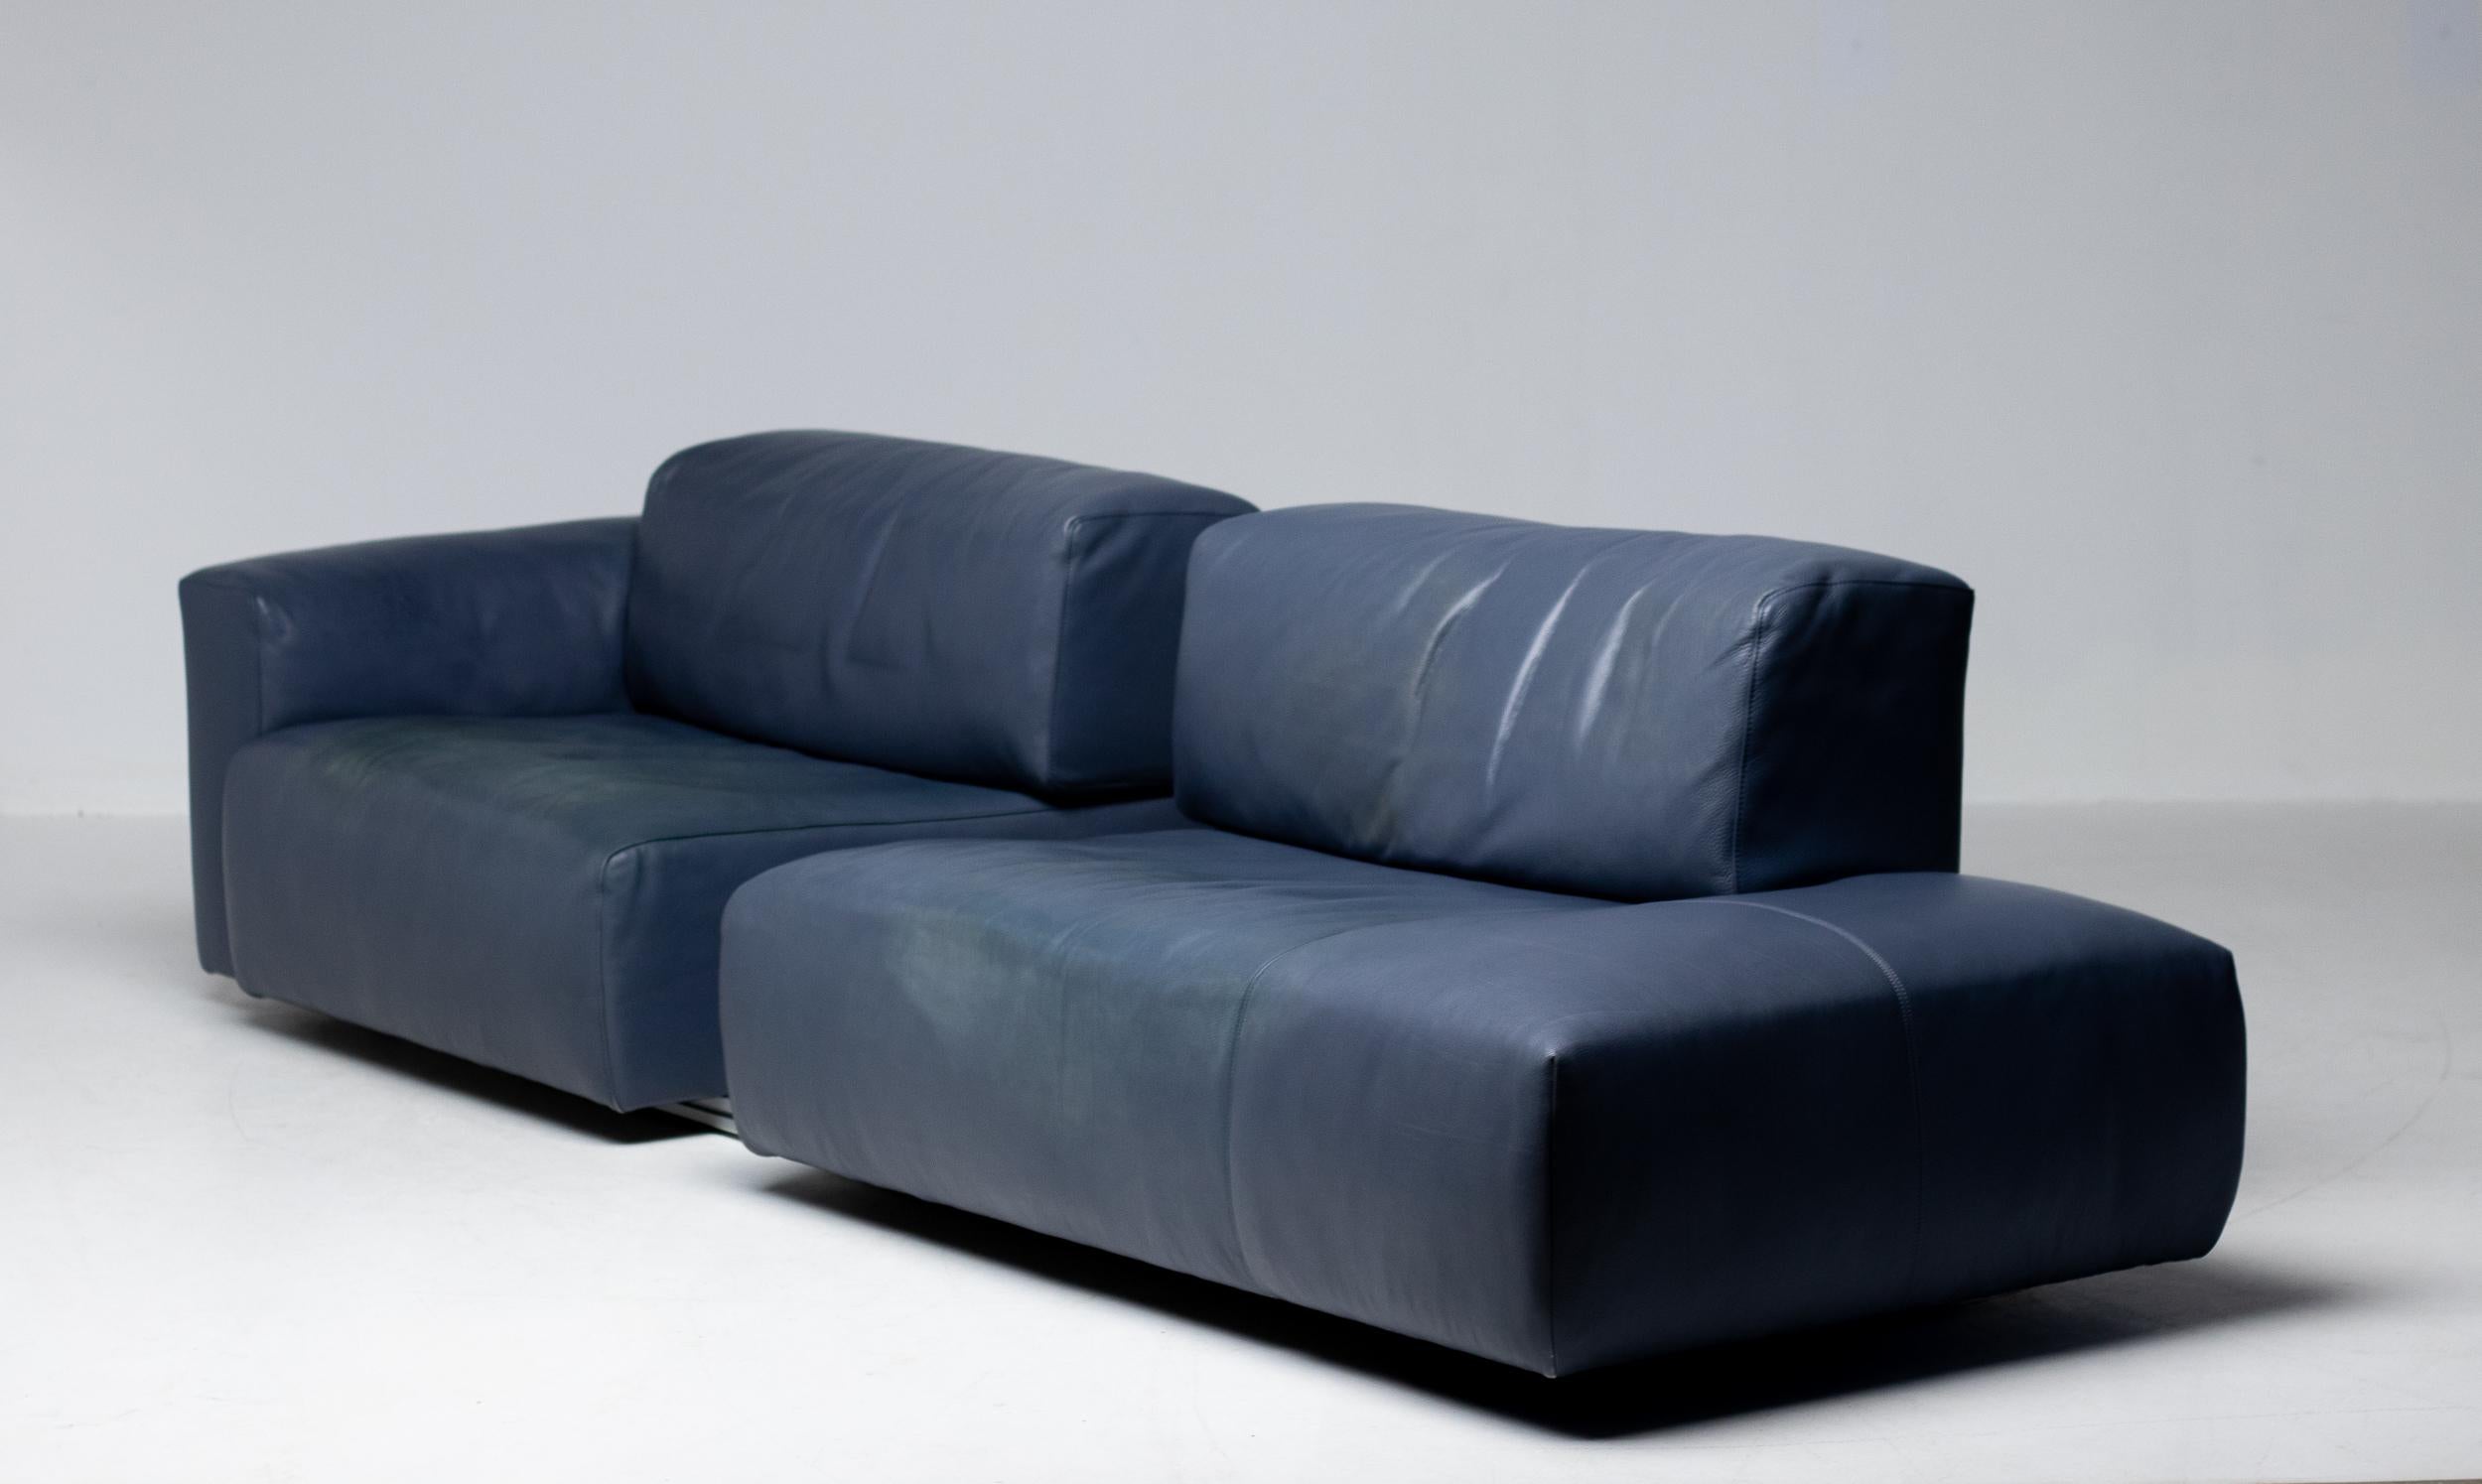 Late 20th Century Molinari Systema Modular Sofa